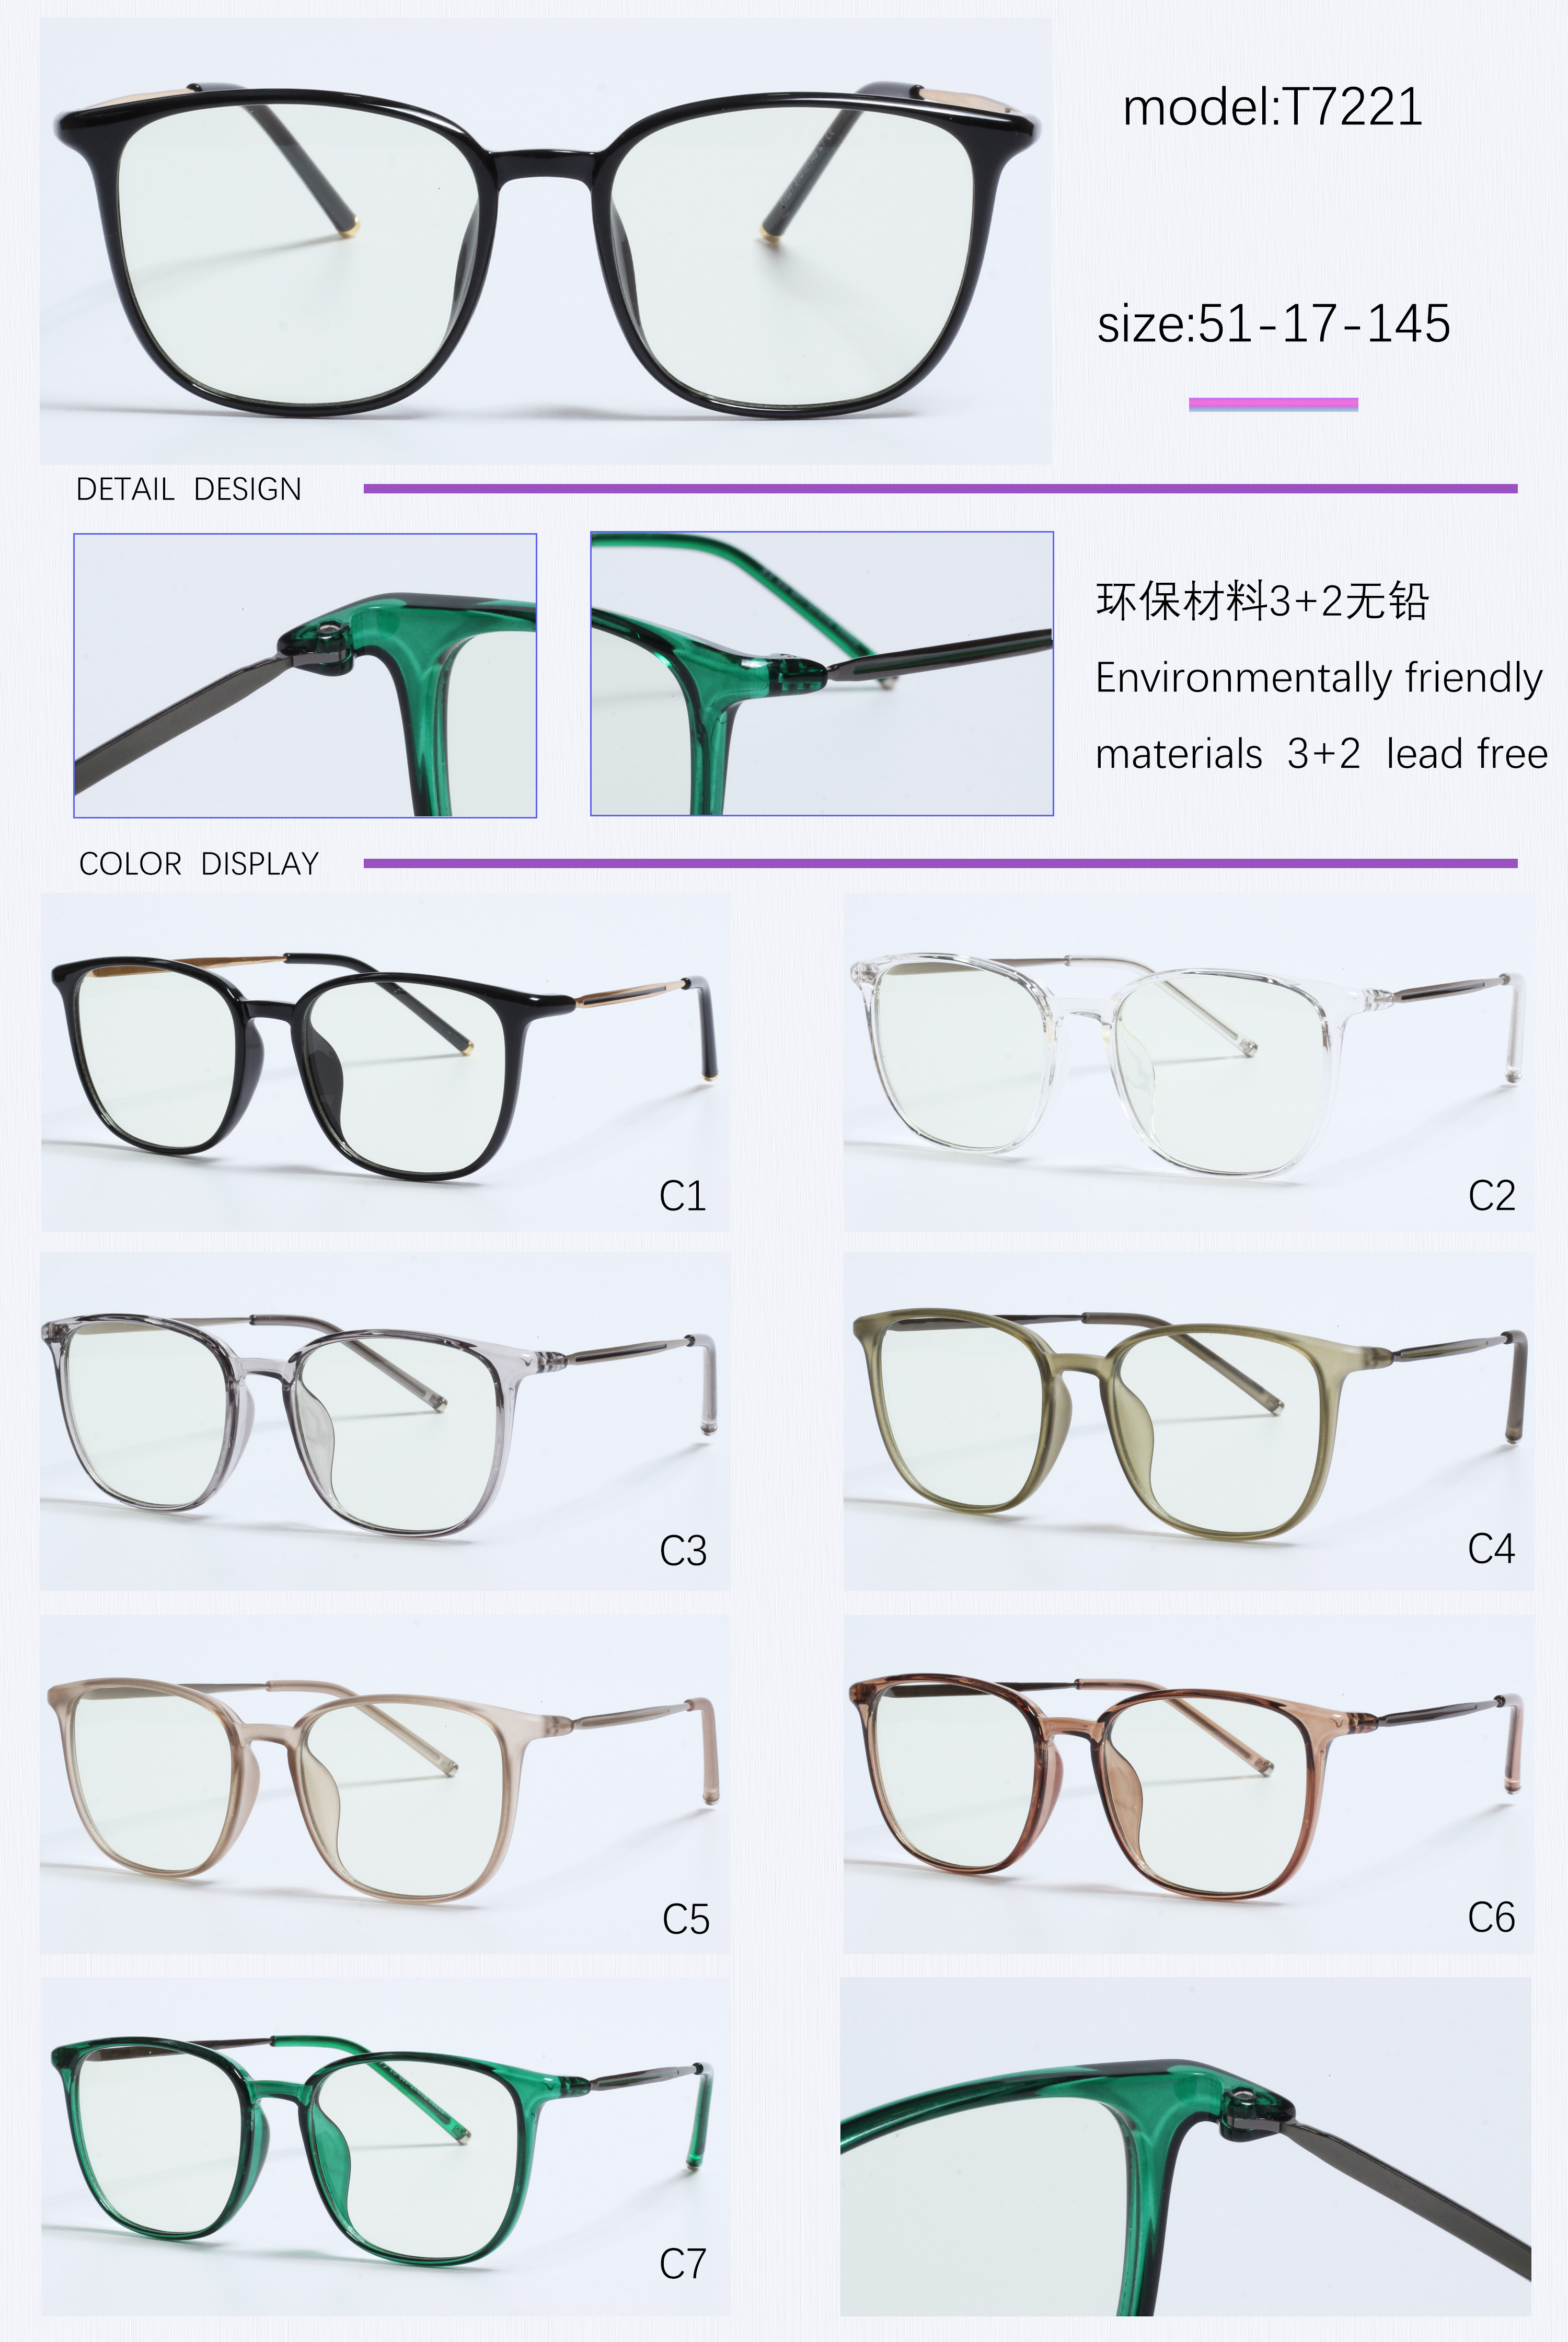 Bag-ong retro lunette anti lumiere designer nga reseta nga baso (11)